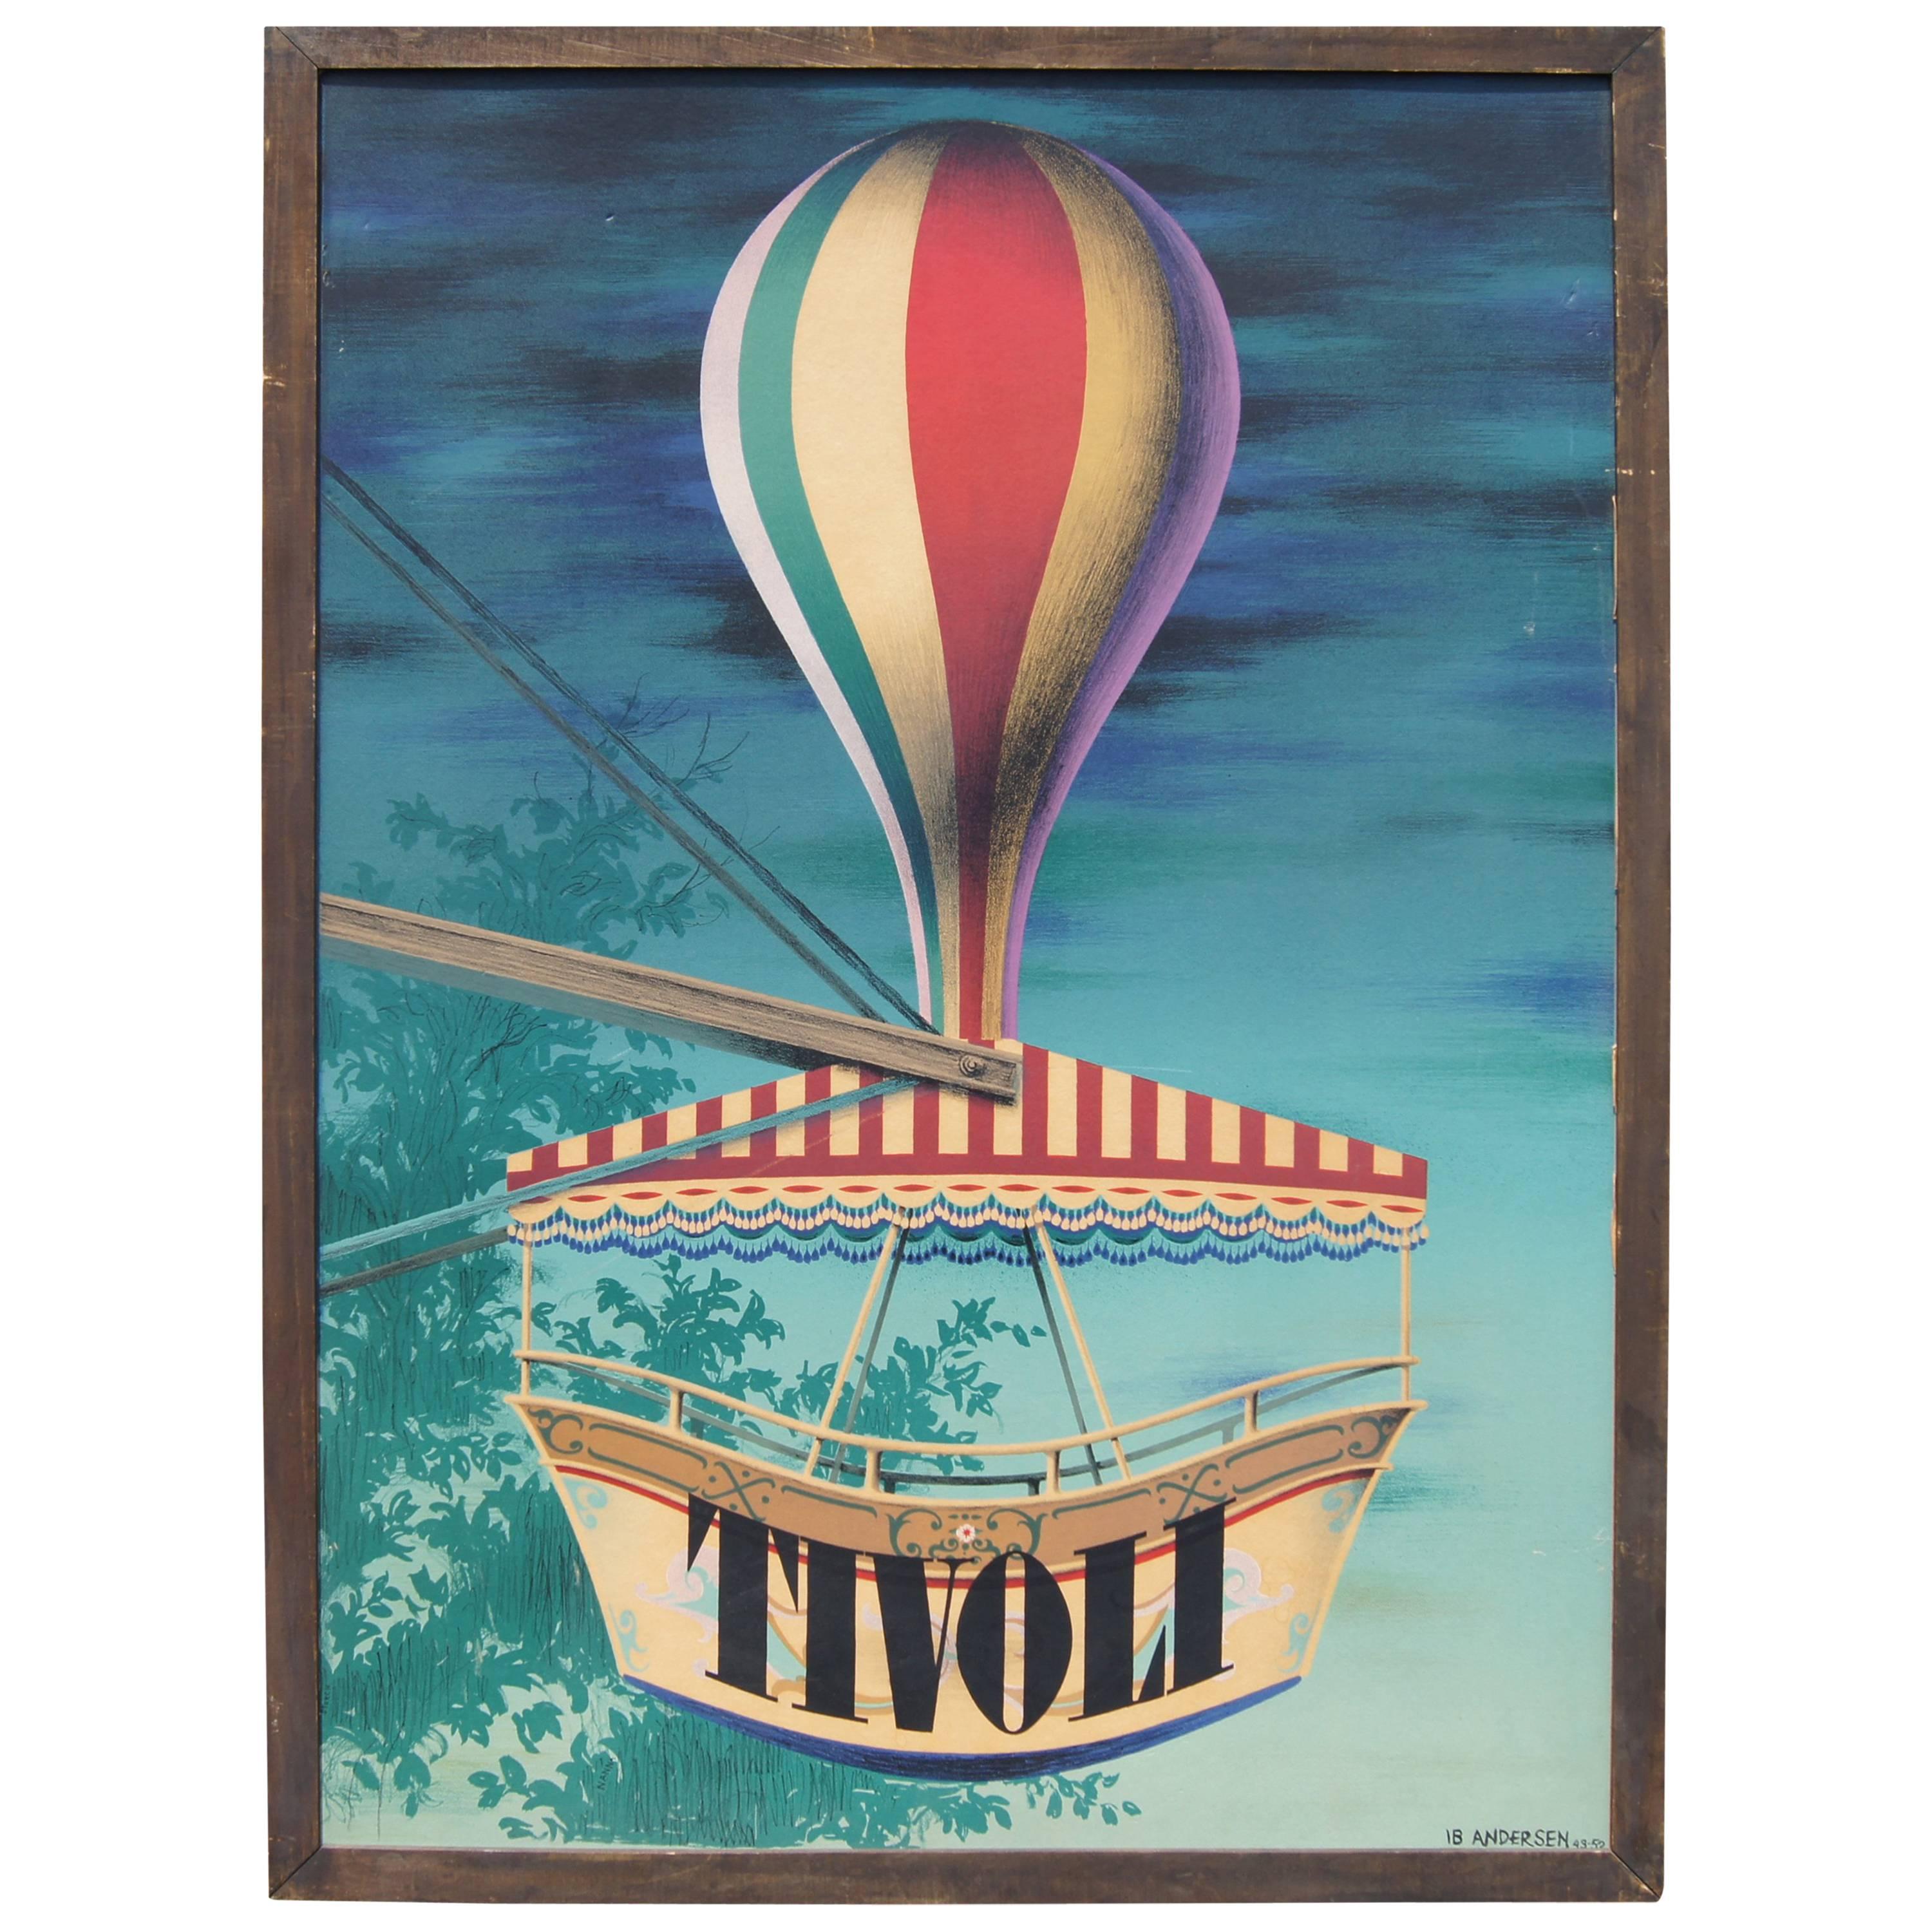 Ib Andersen, Tivoli, Silkscreen Poster